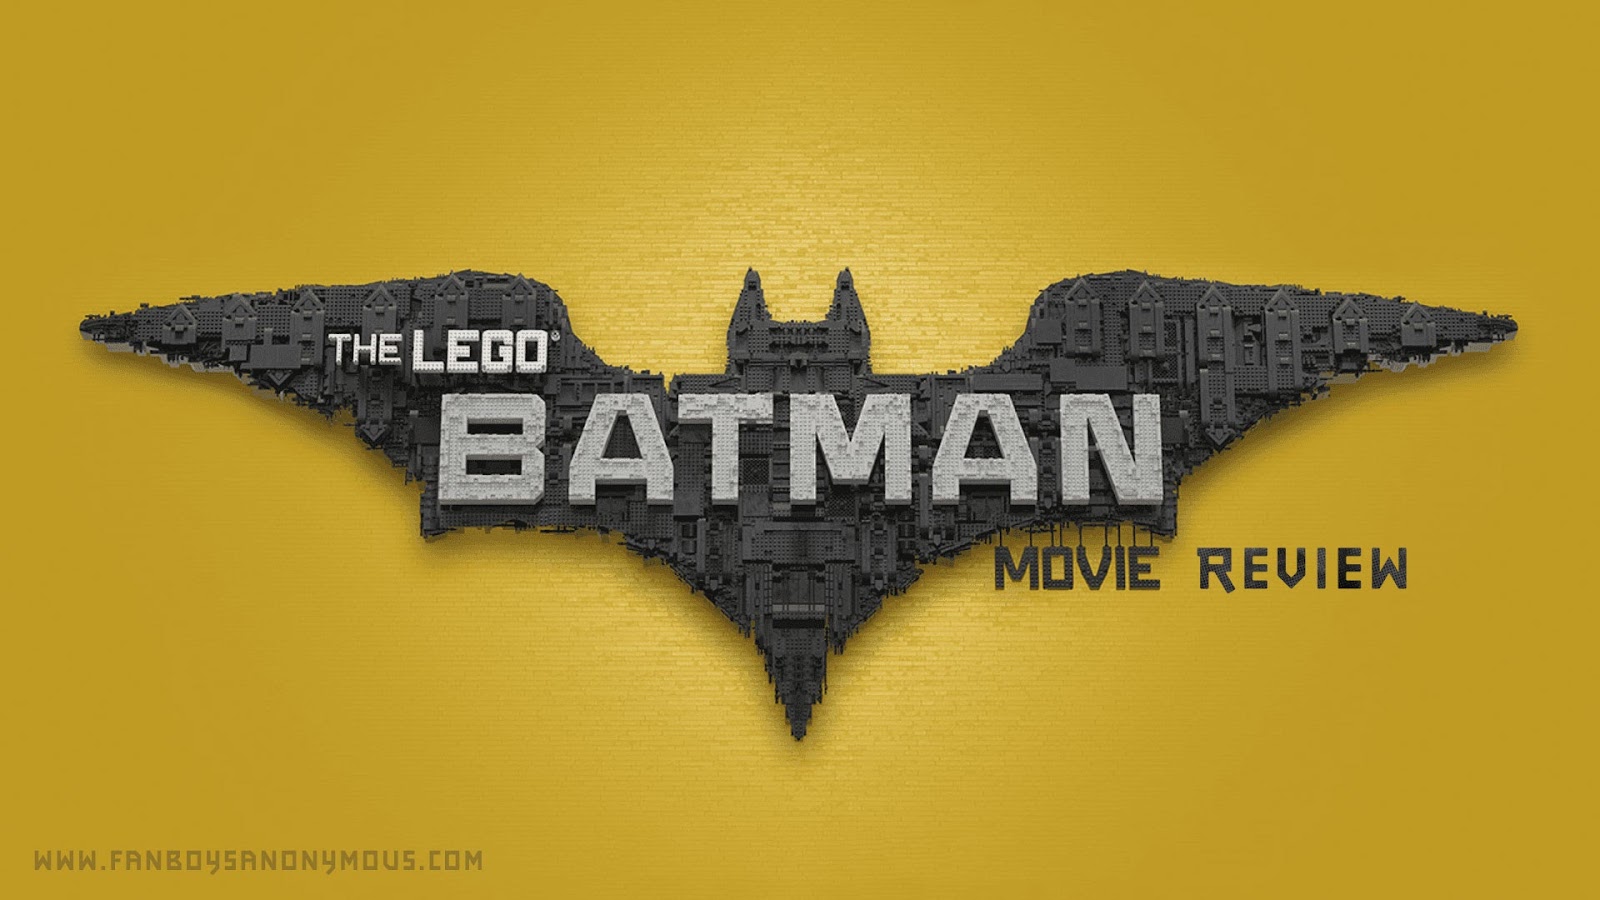 movie review THE LEGO BATMAN MOVIE podcast